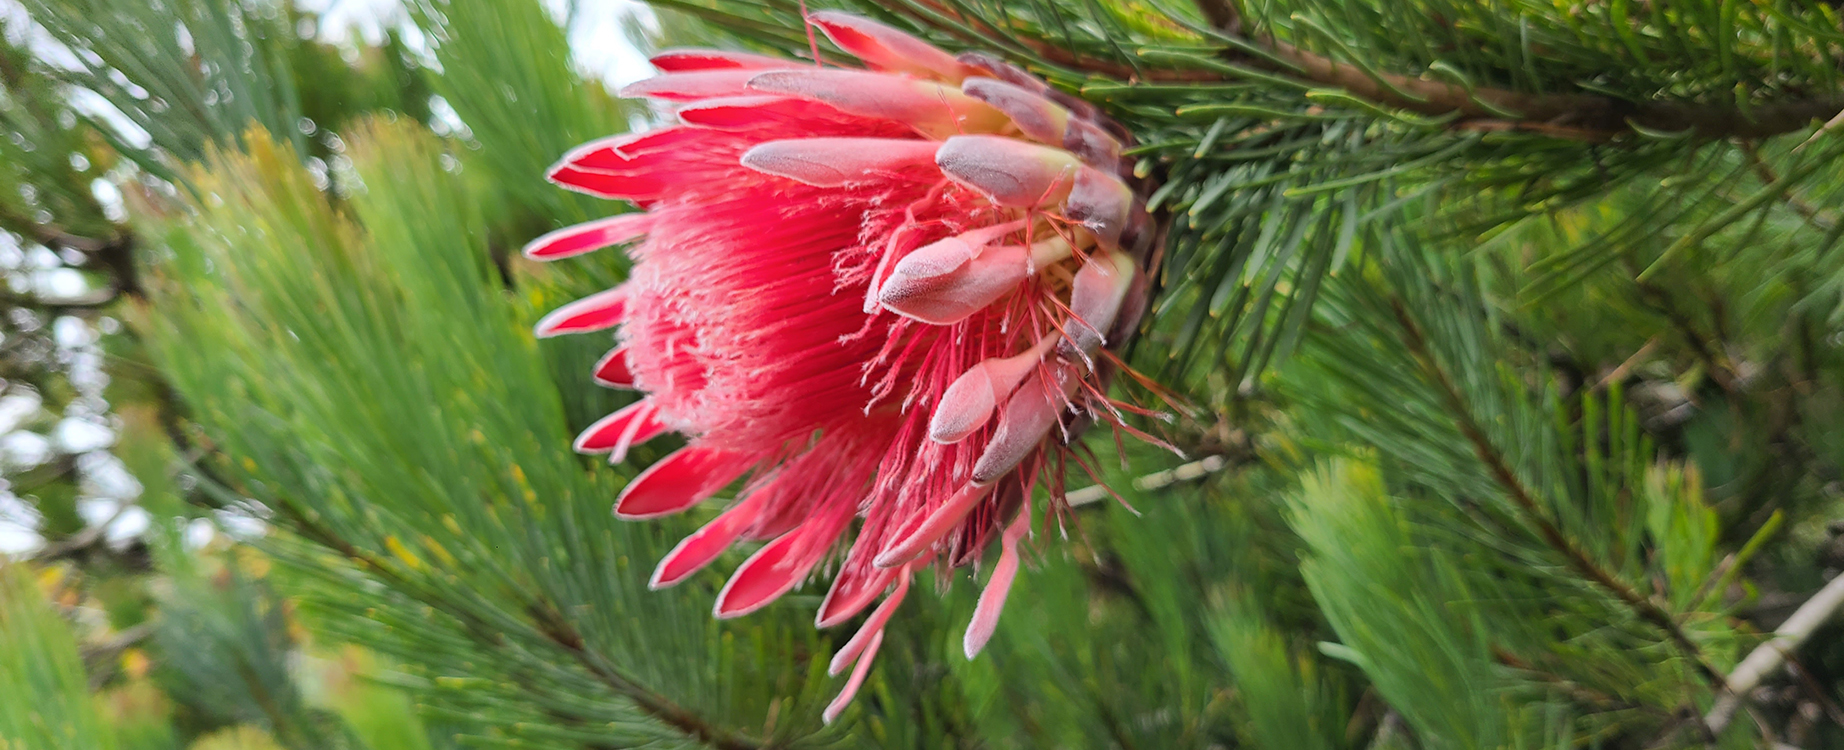 Protea - pretty pink flower